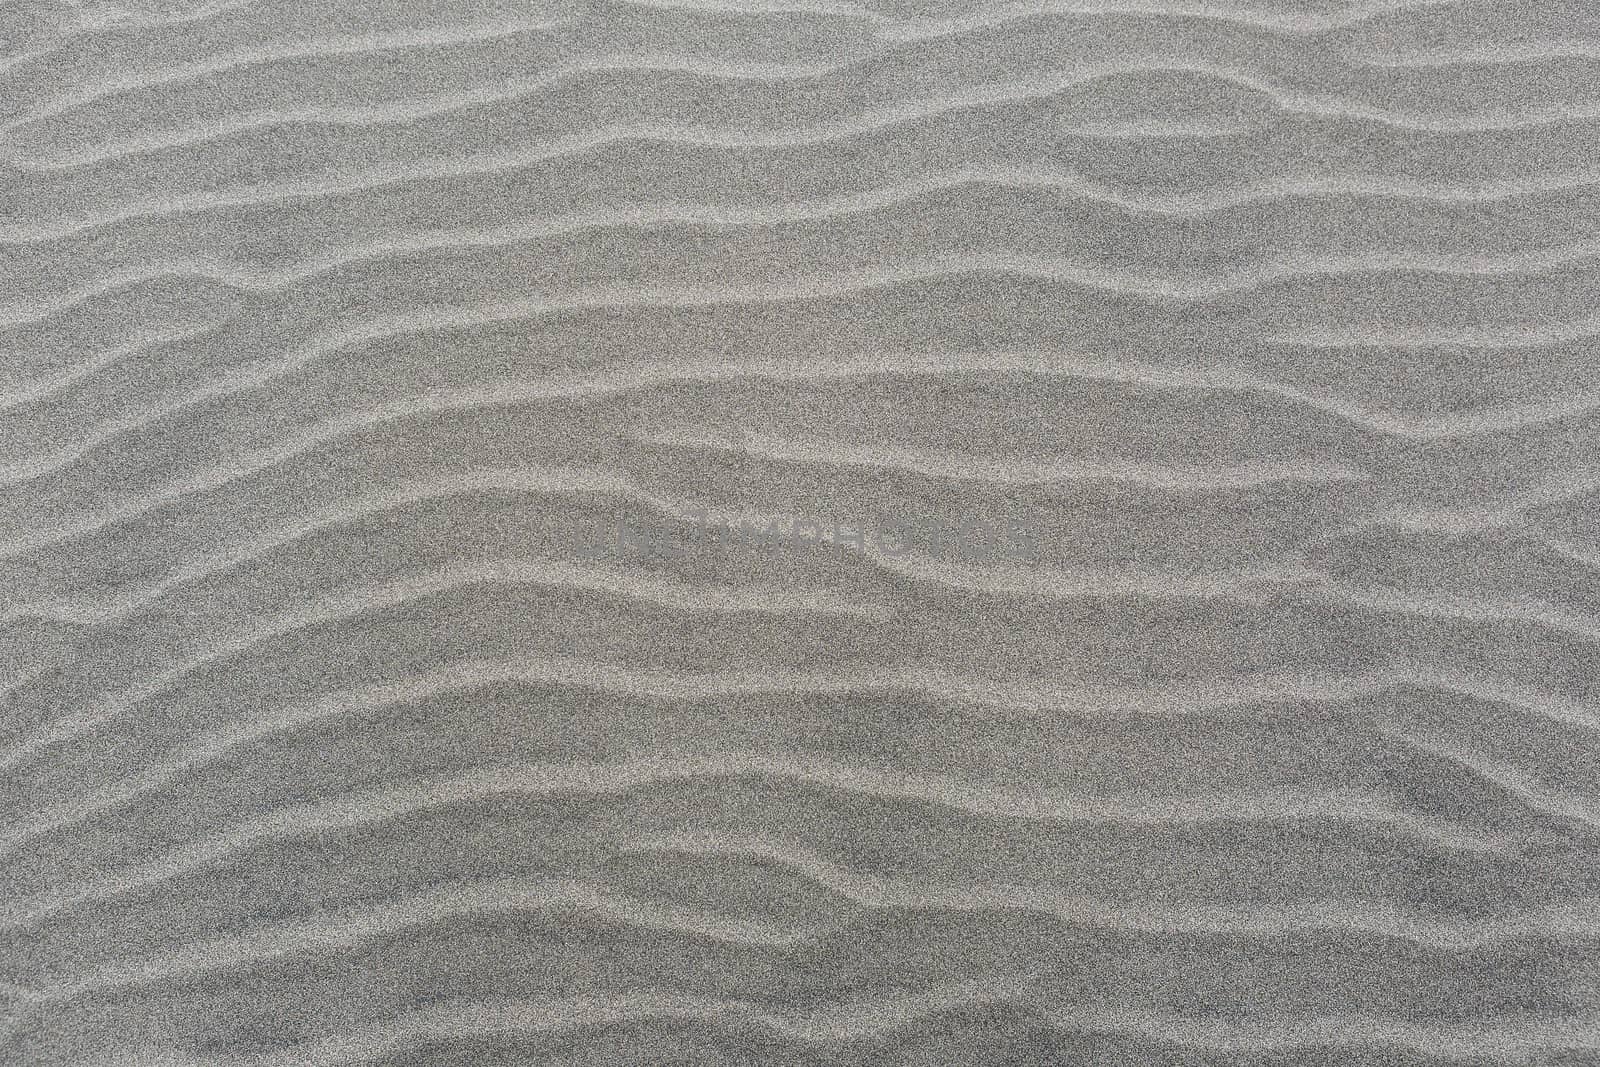 Windswept Sand Dunes Pattern Background by jpldesigns